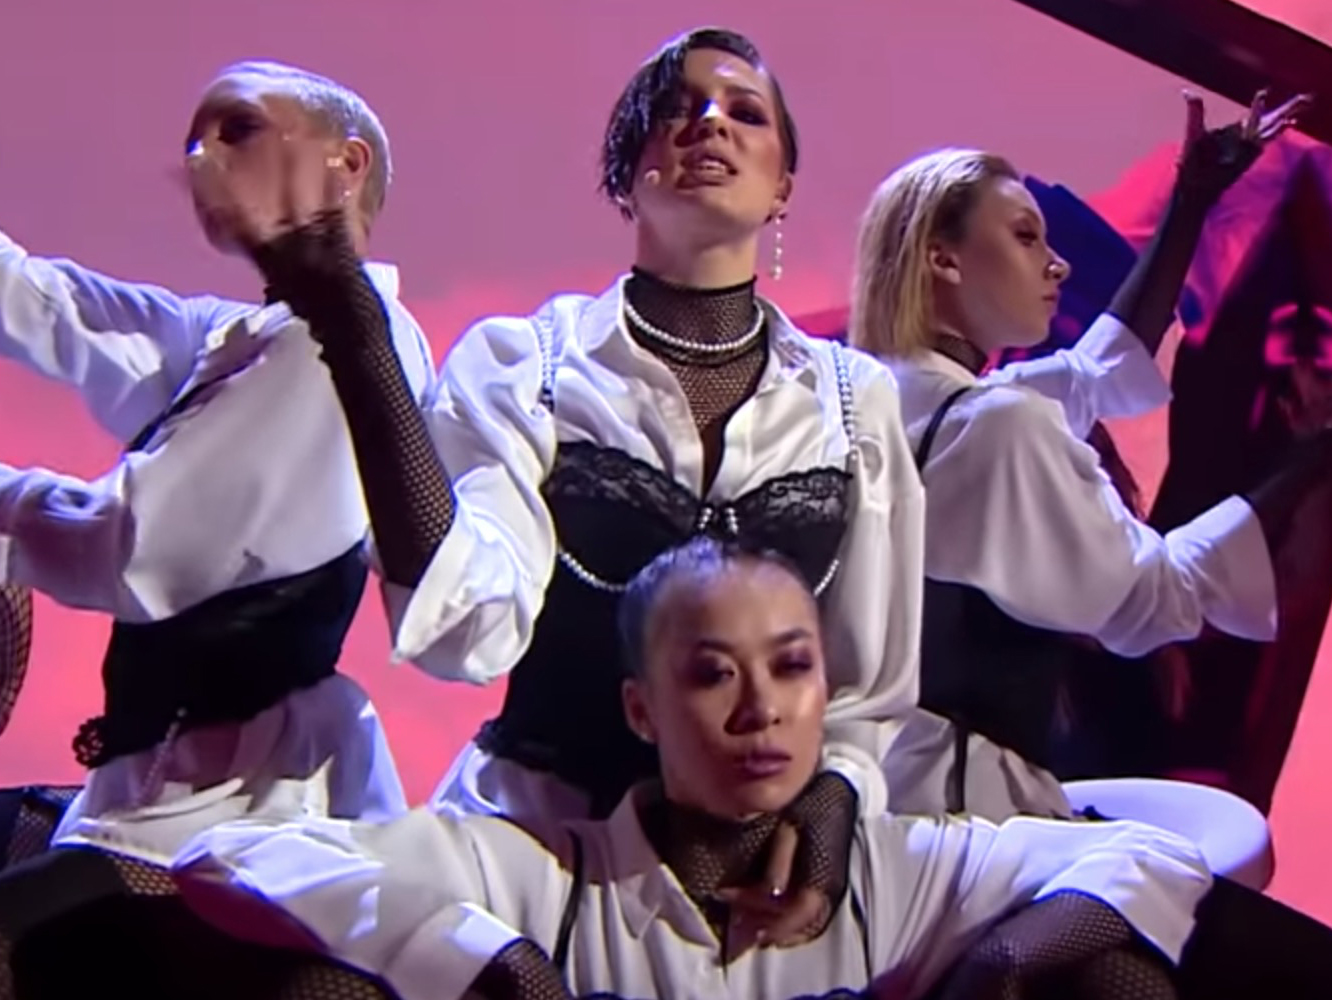  Ucrania culmina su arranque de estupidez como debía: abandona Eurovisión en 2019